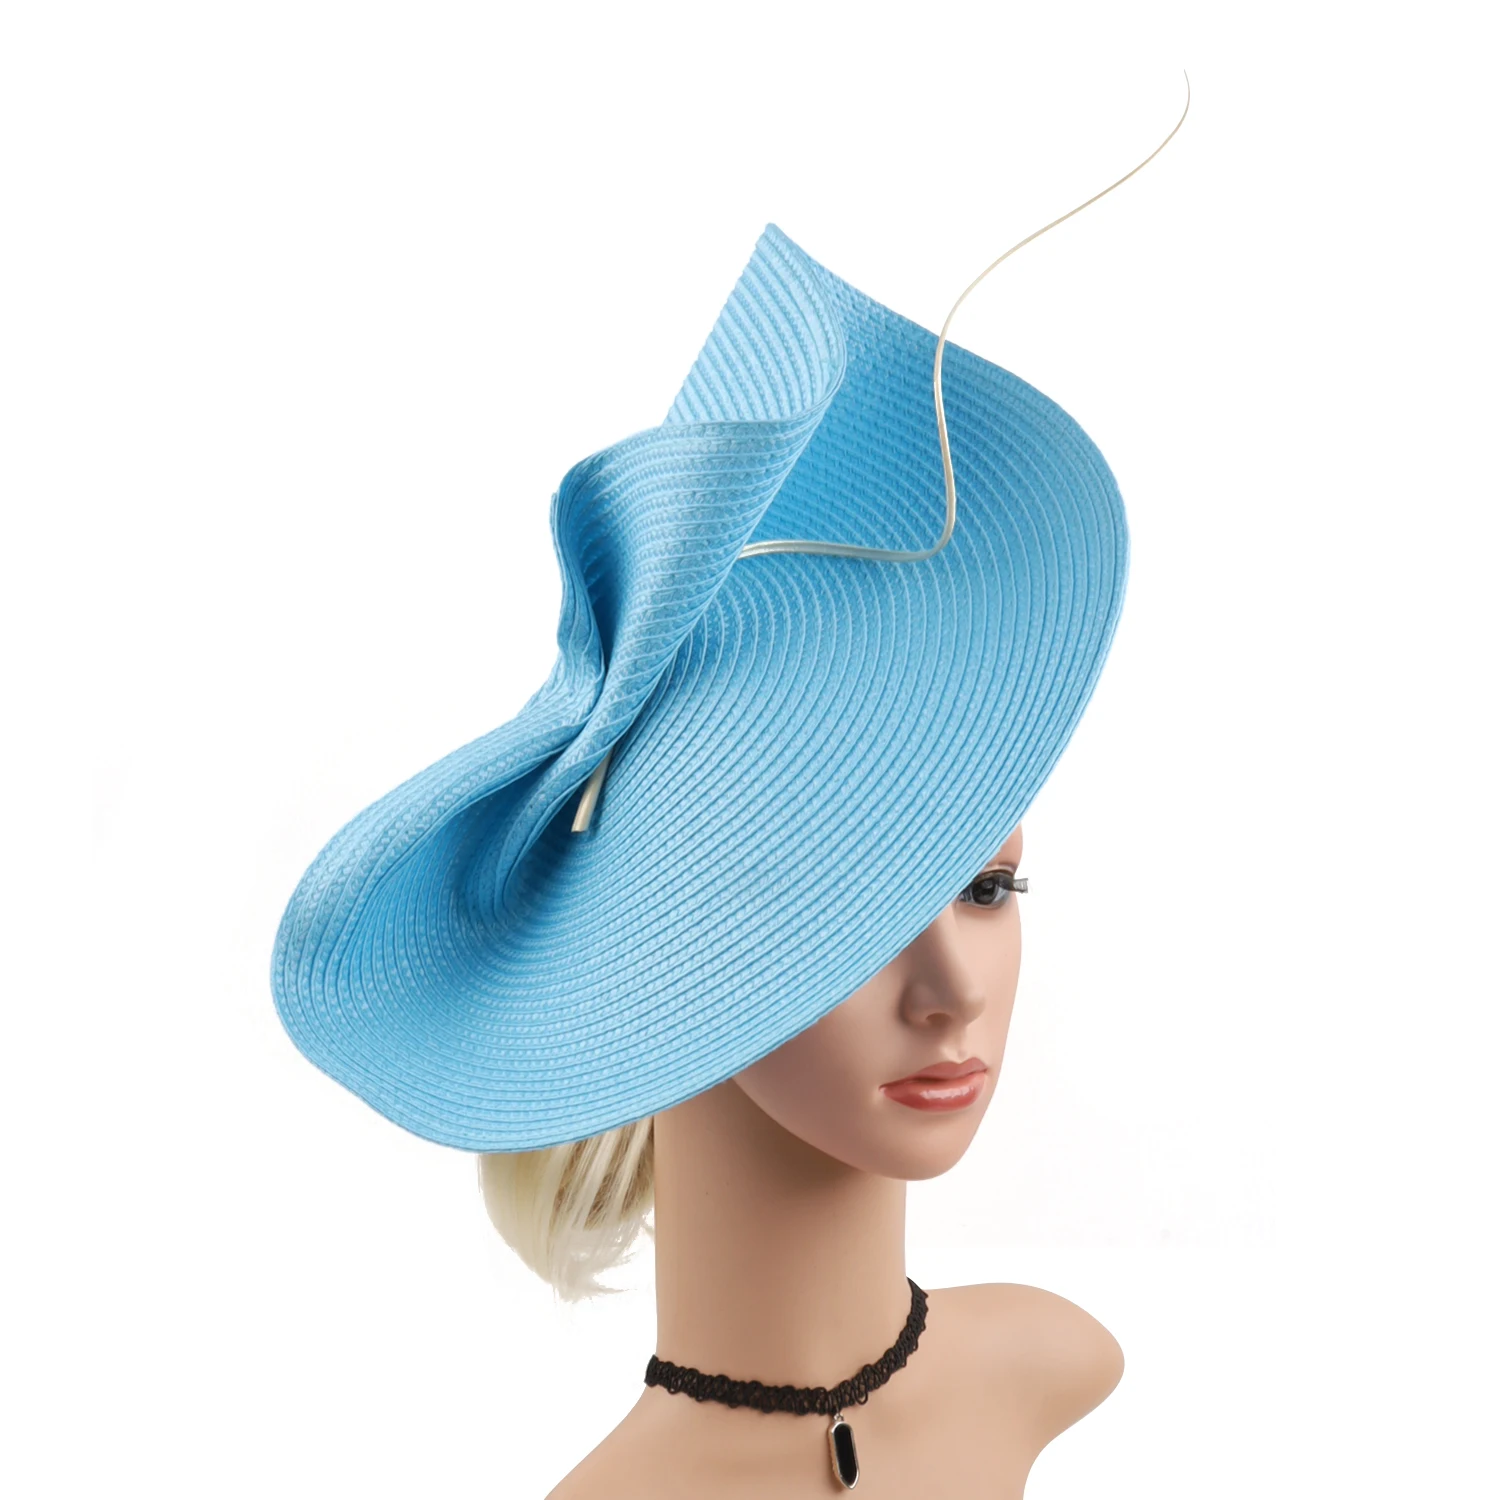 

Hot Sale Fashion Fascinator Kentucky Derby Hat Straw Colorblock Wedding Tea Party Headband For Women Ladies